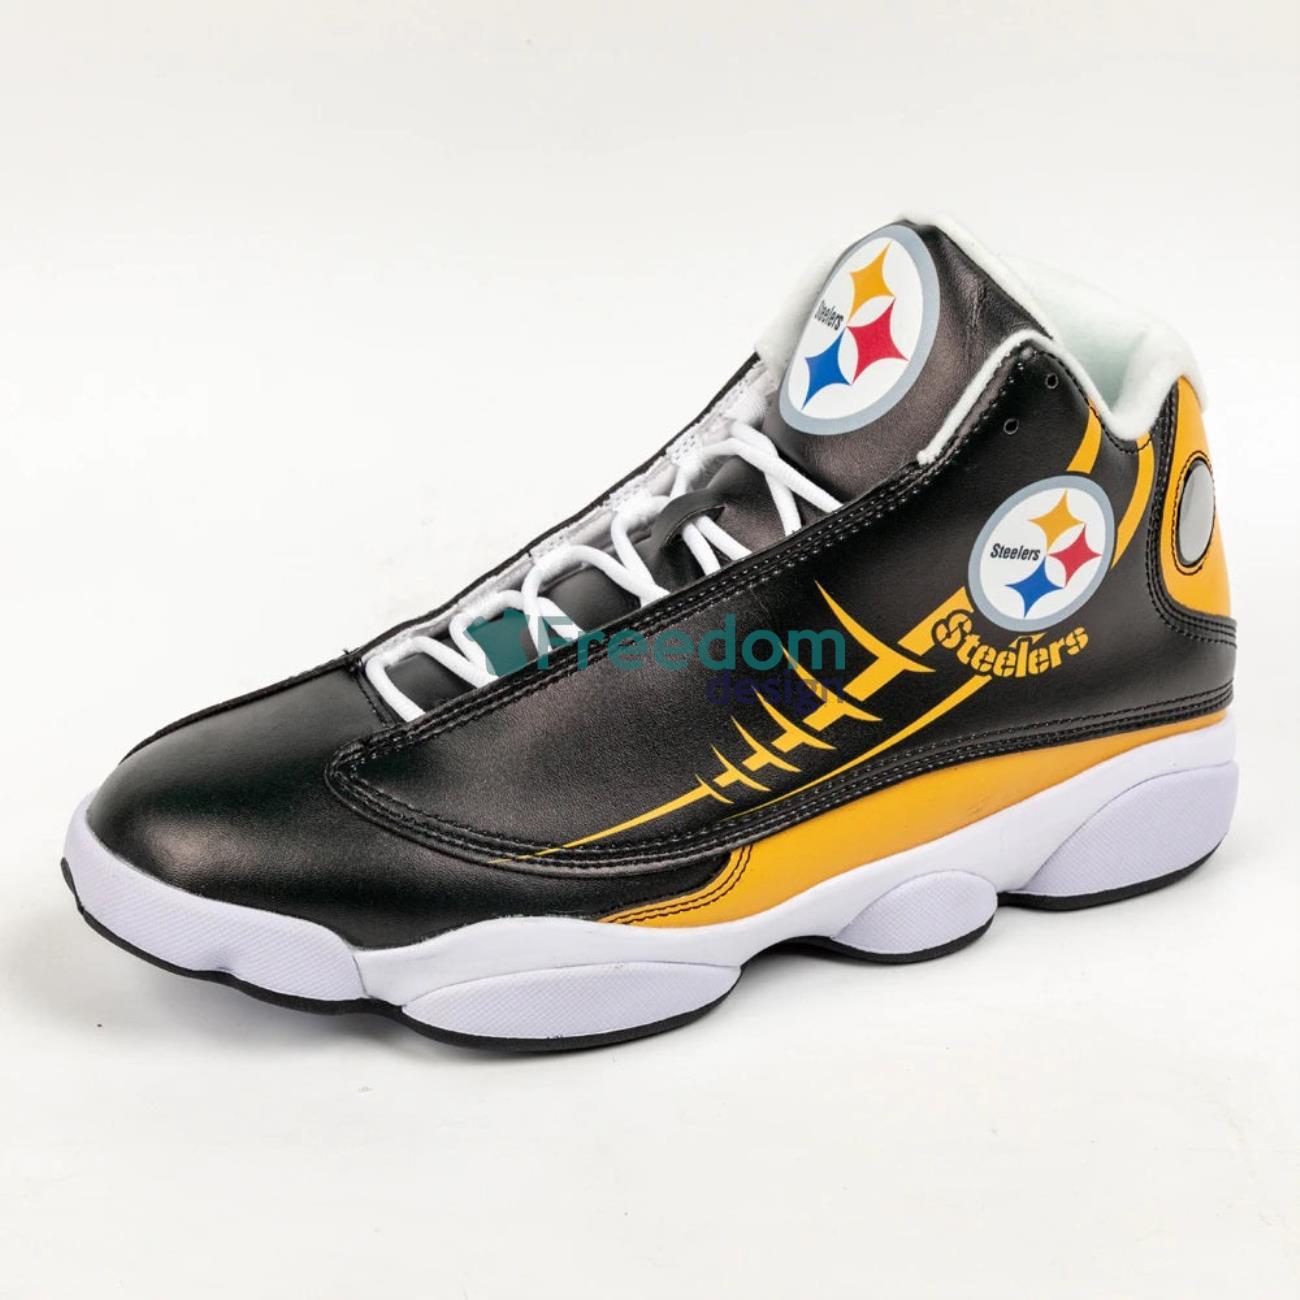 Pittsburgh Steelers Team 3D Air Jordan 13 Sneaker Shoes For Fans